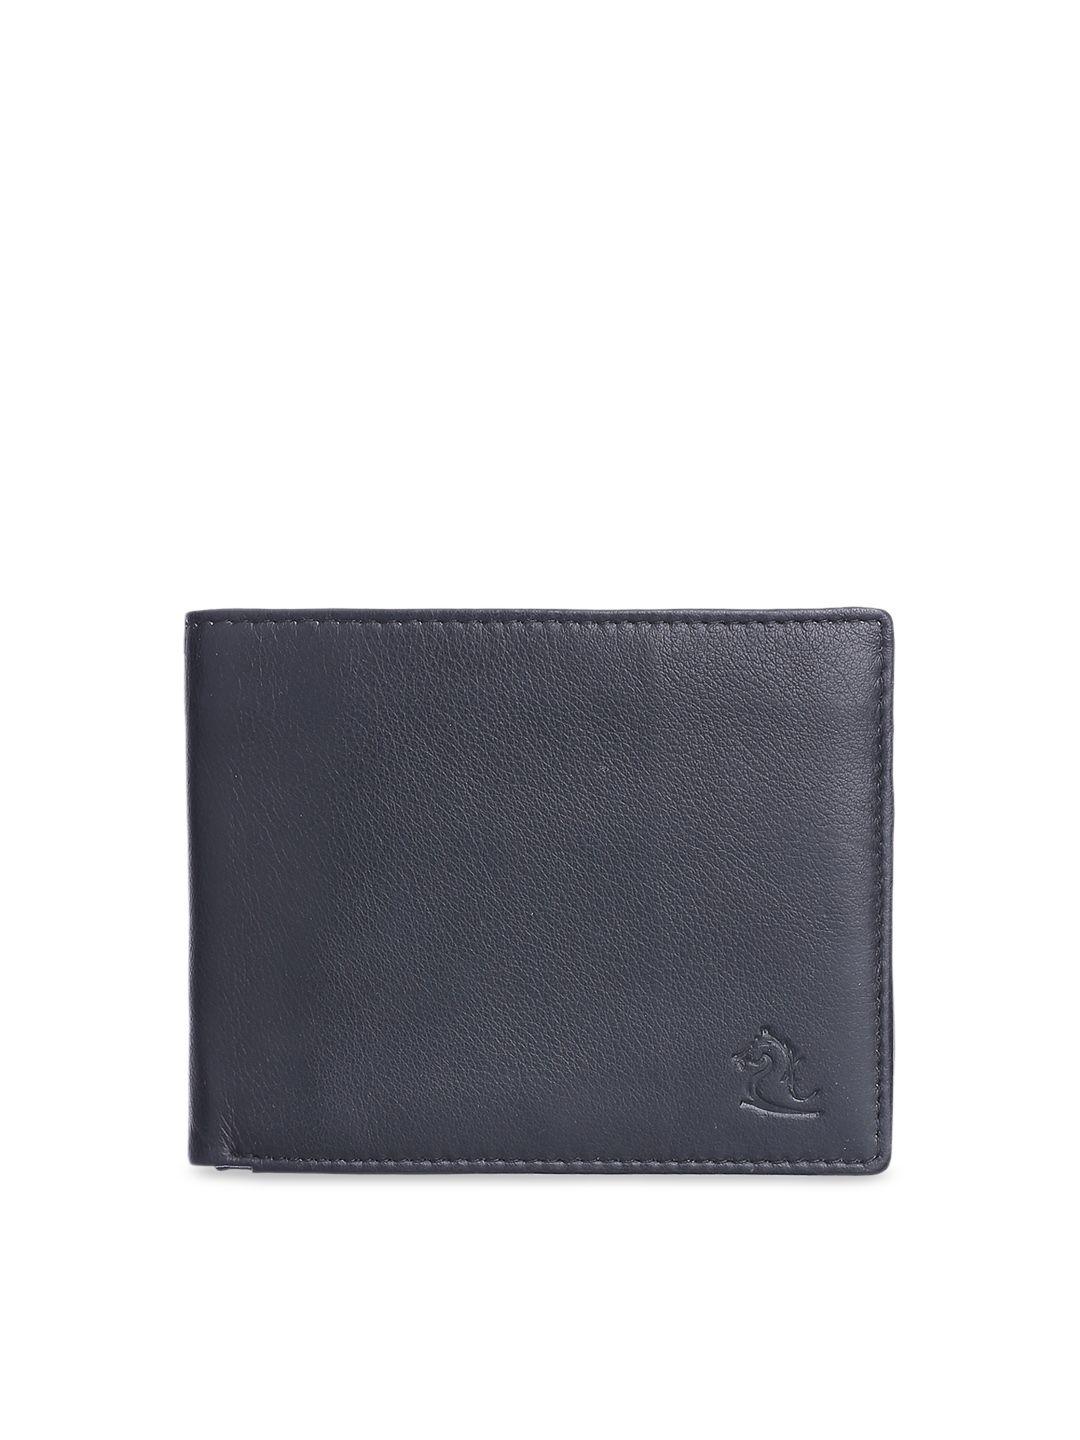 kara-men-black-solid-two-fold-leather-wallet